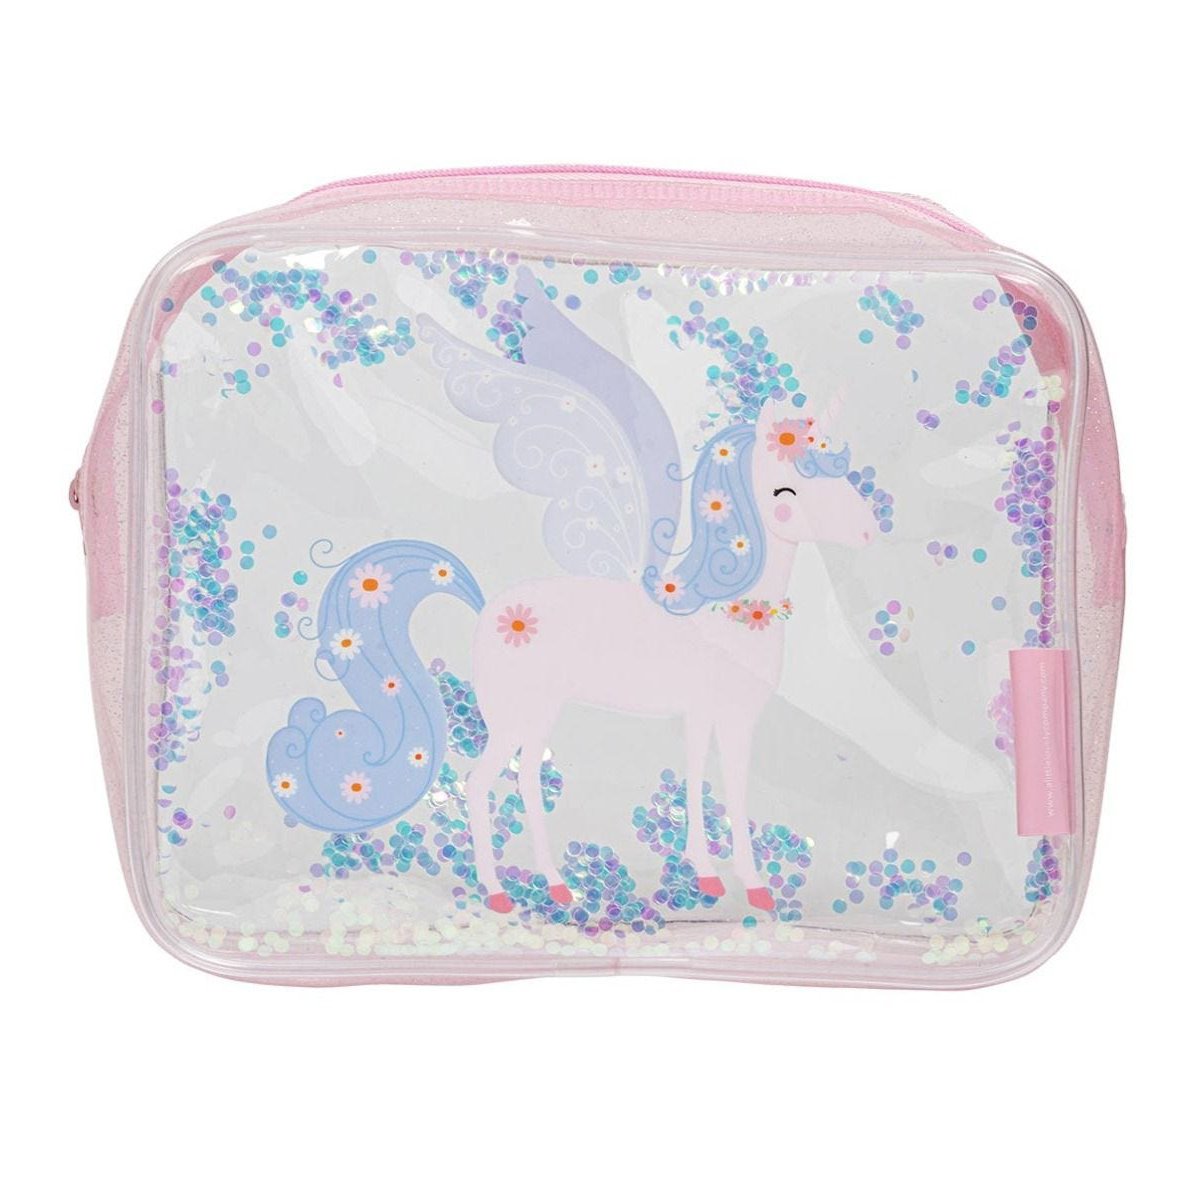 a-little-lovely-company-toiletry-bag-glitter-unicorn- (1)